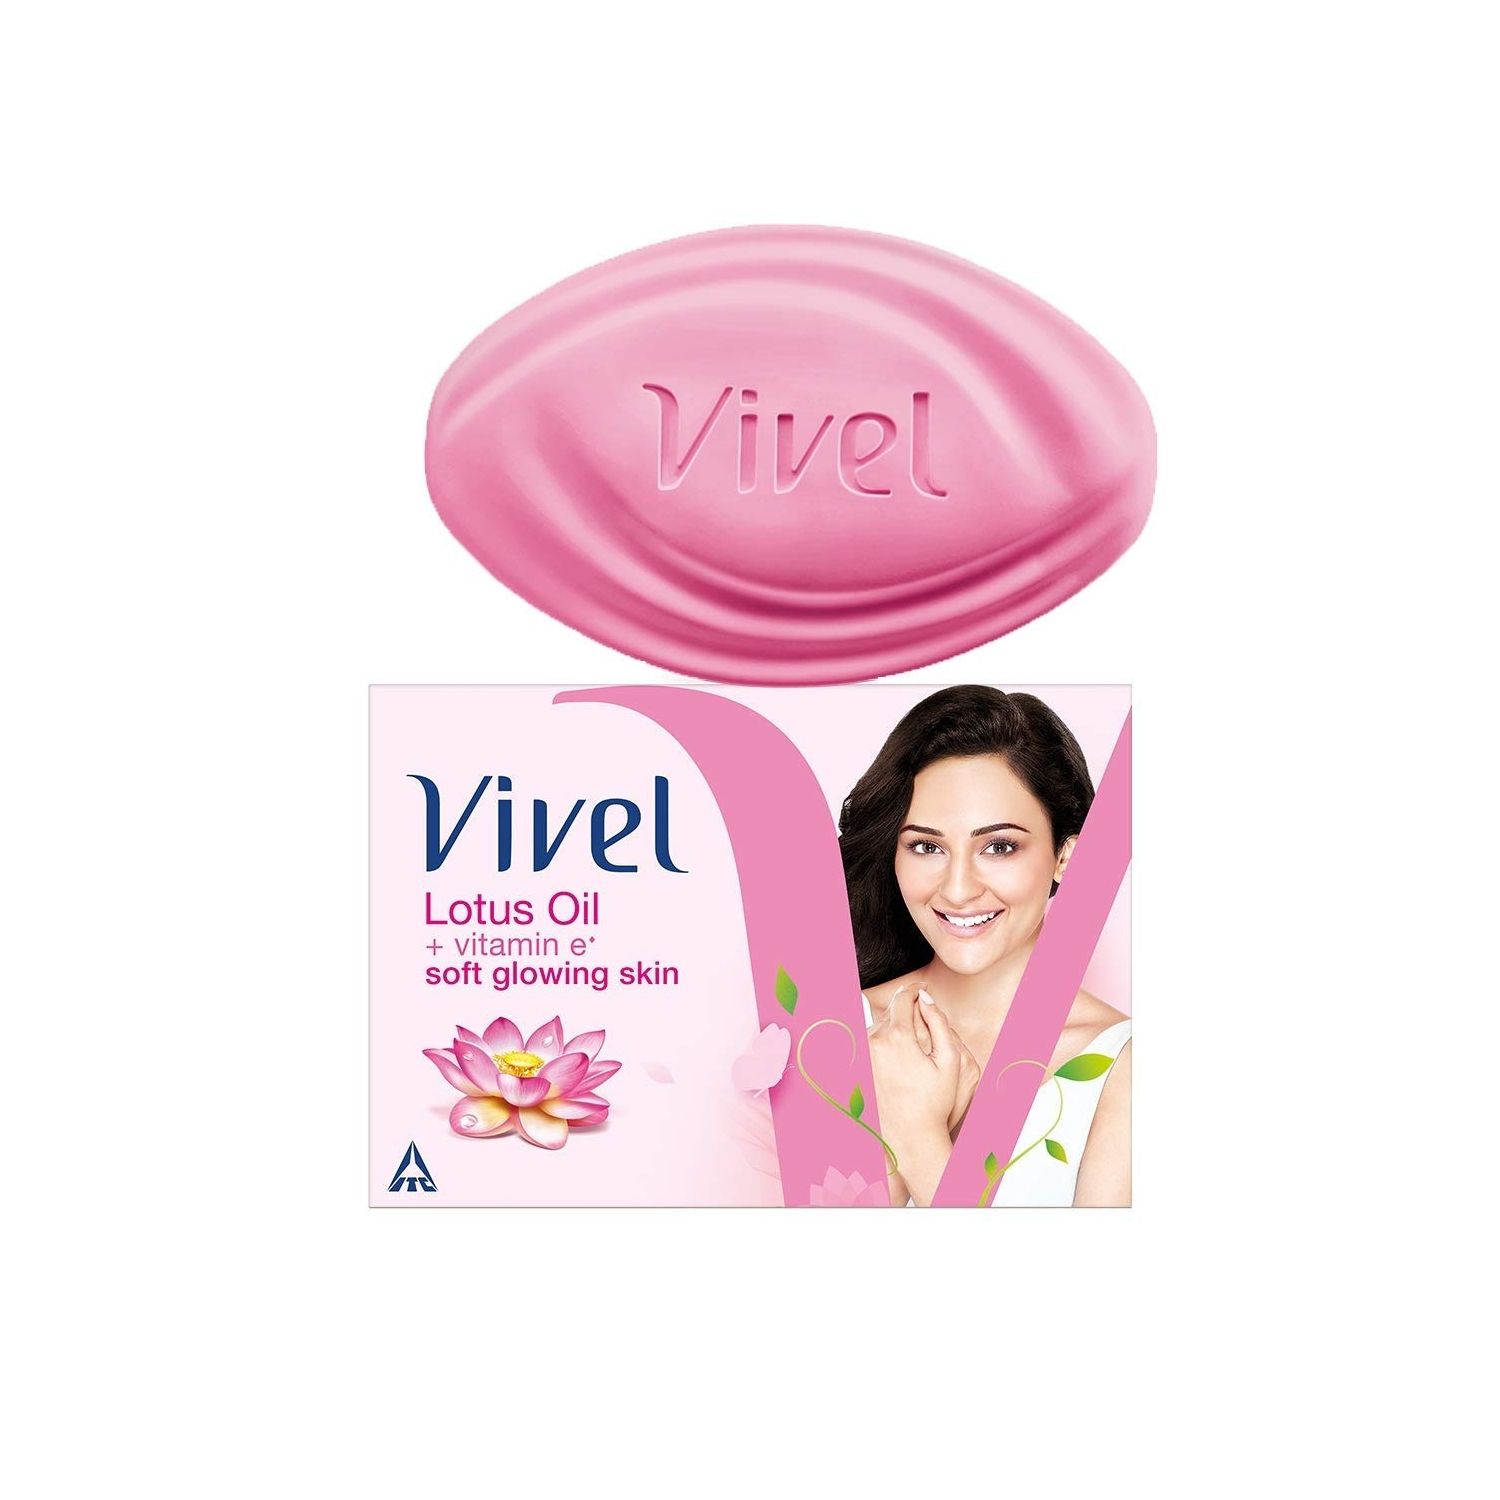 Vivel VedVidya Luxury Skincare Bathing Soaps Soft, Glowing Skin, Even-toned  | eBay